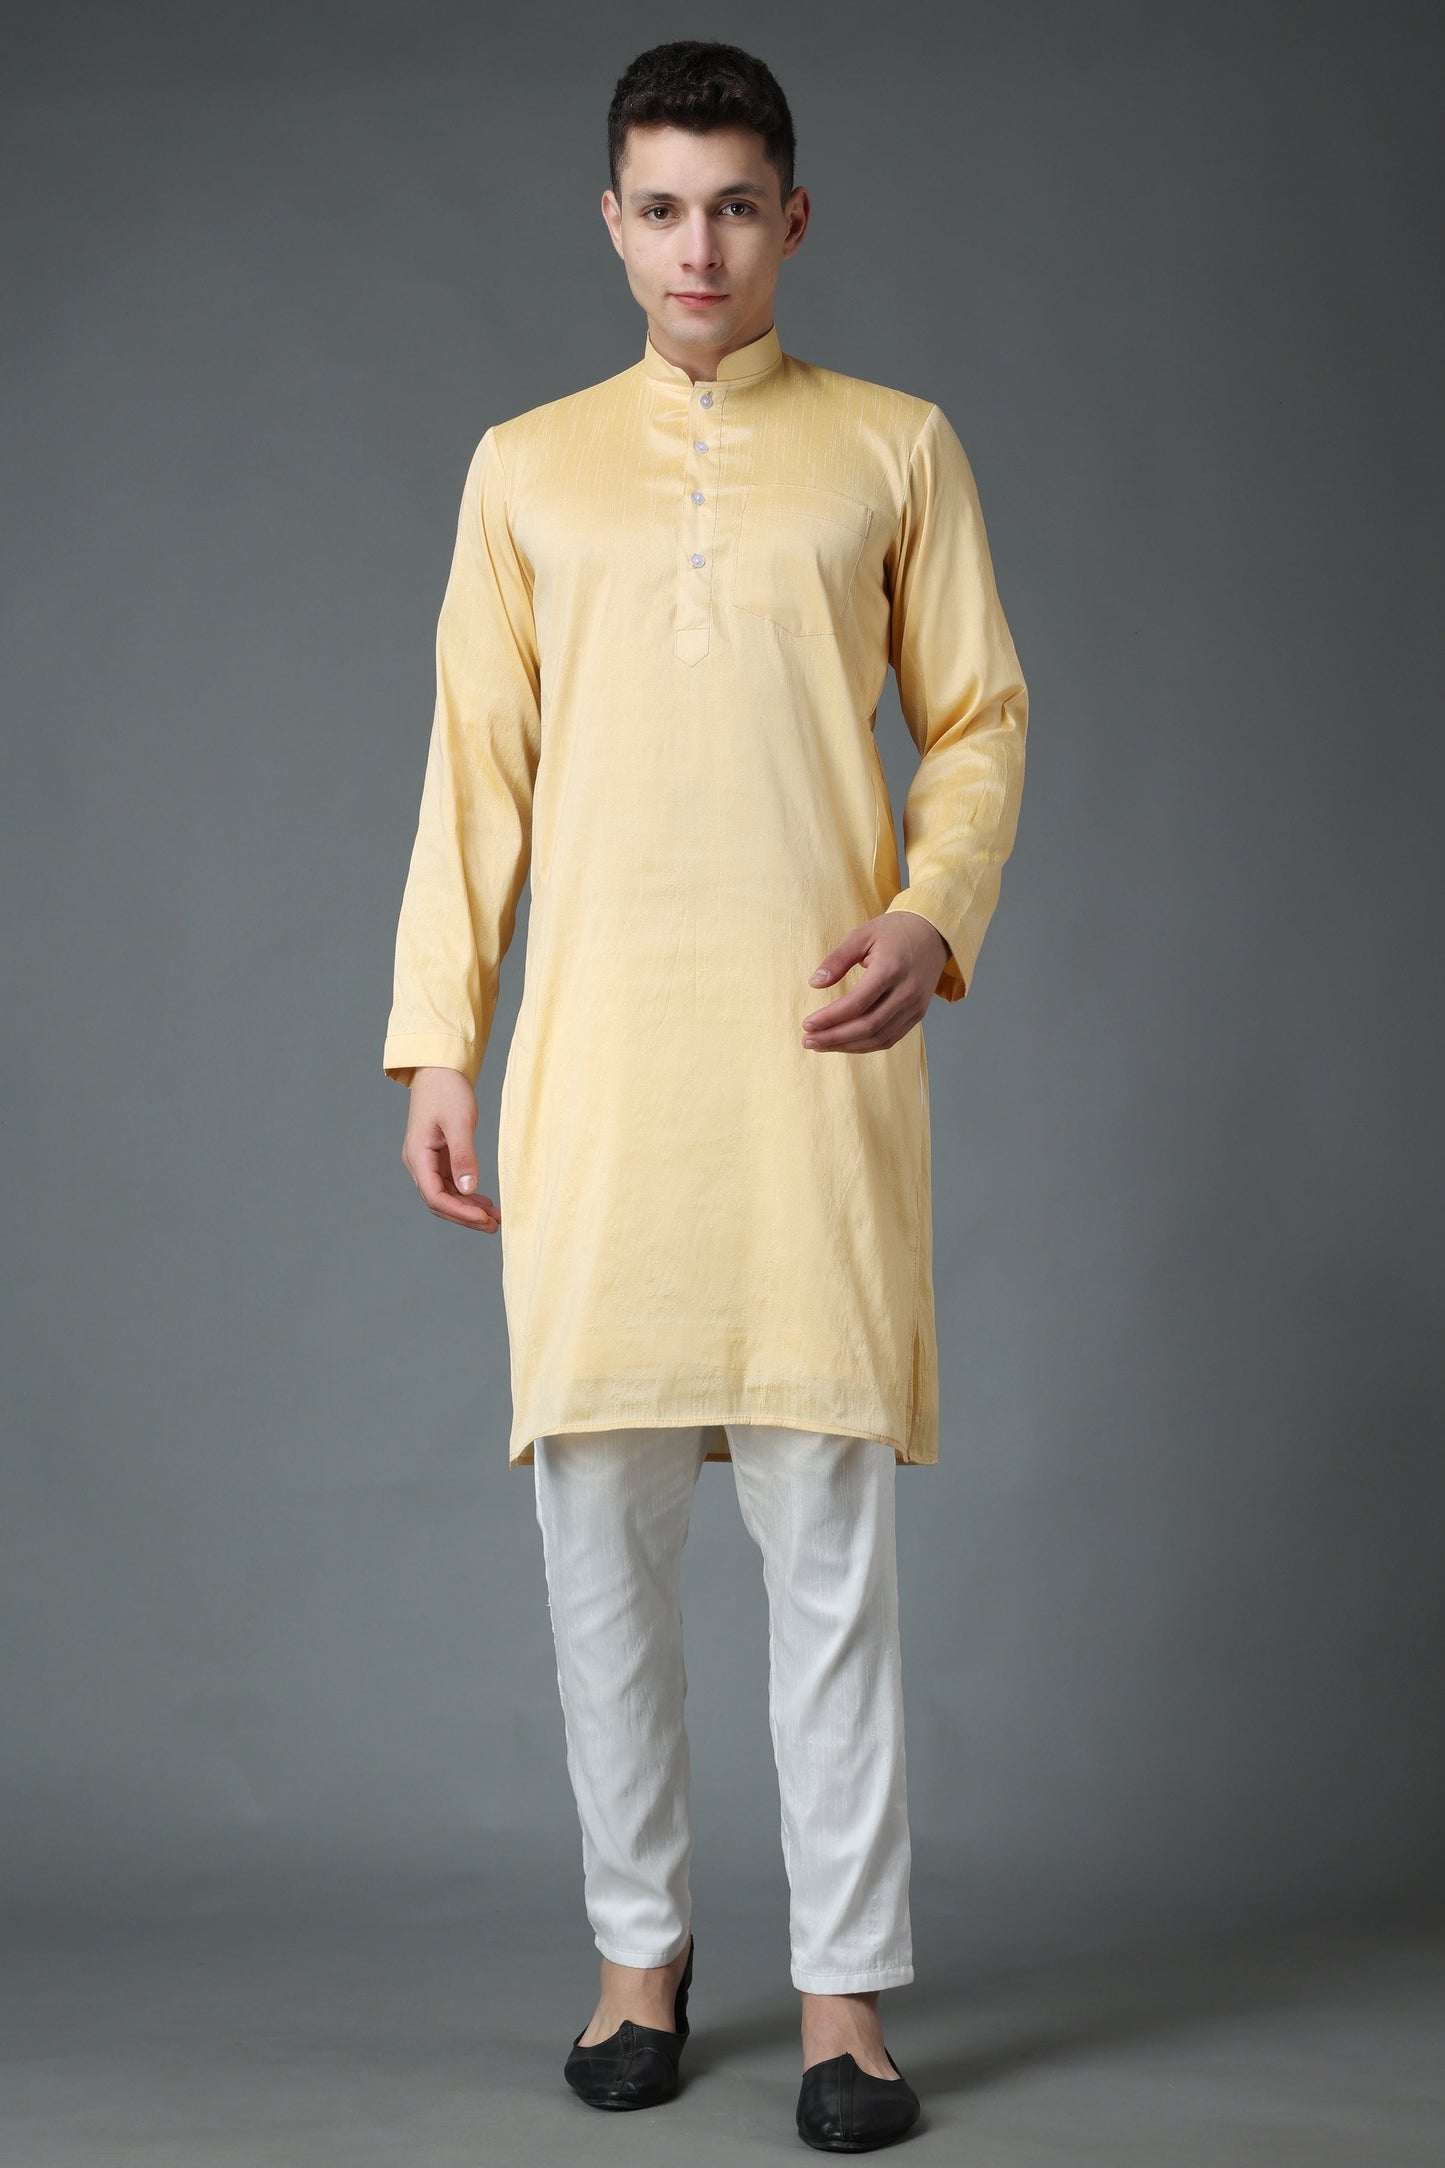 Men's Plus Size Buttermilk Yellow Silk Kurta Pajama